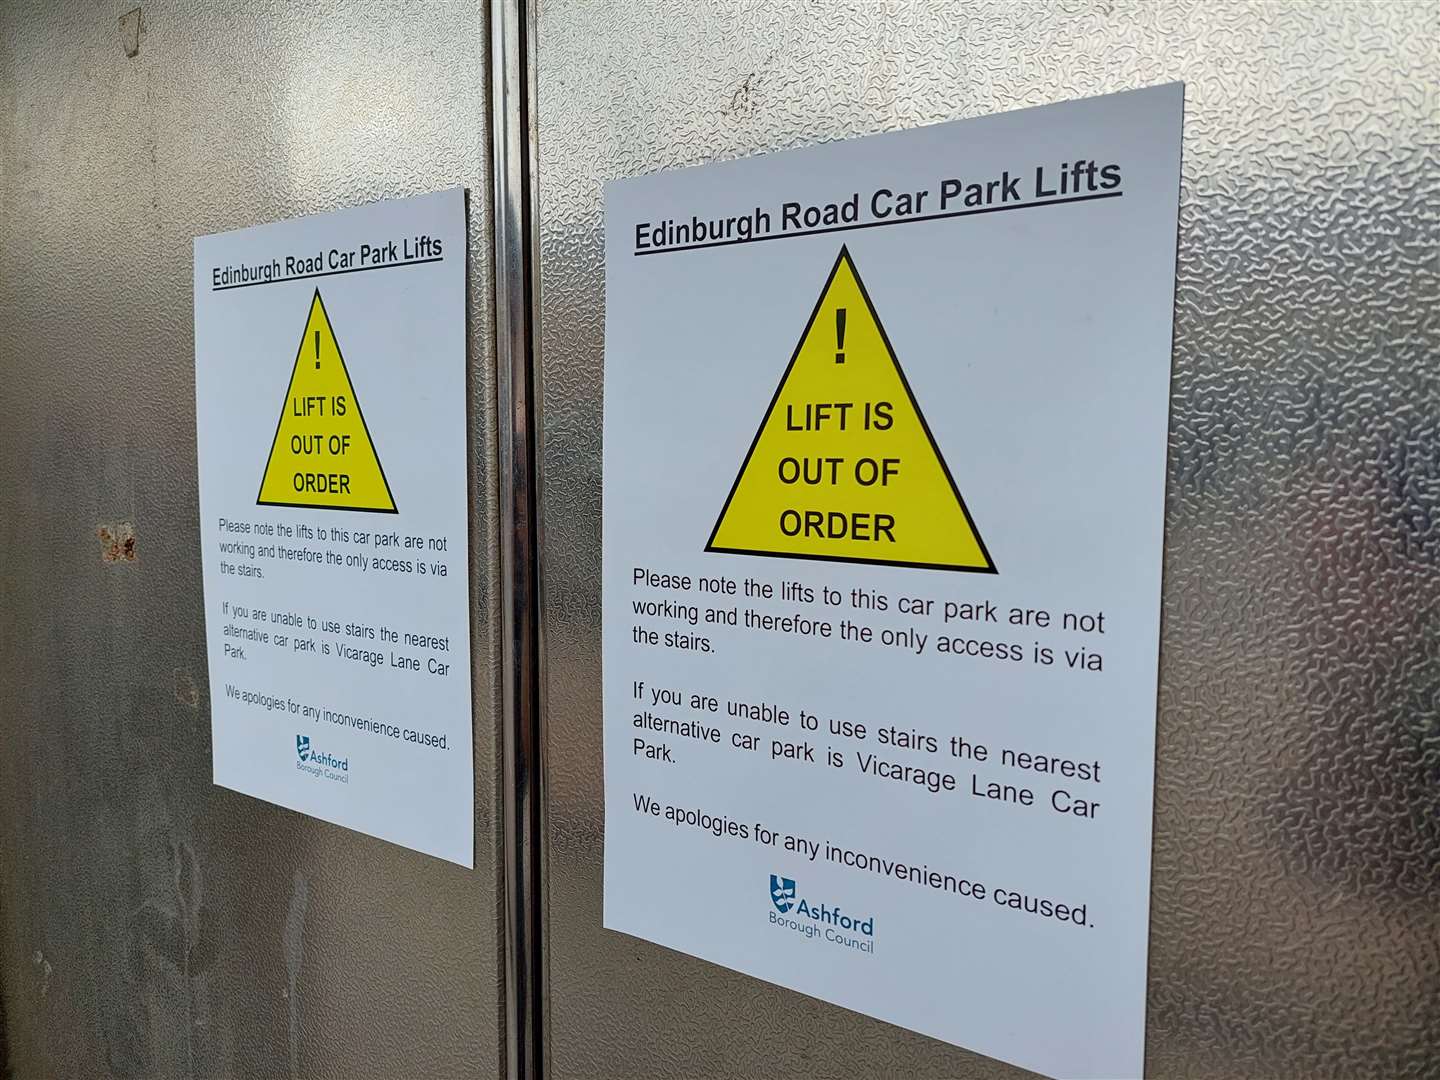 The lifts at the Edinburgh Road car park have closed again